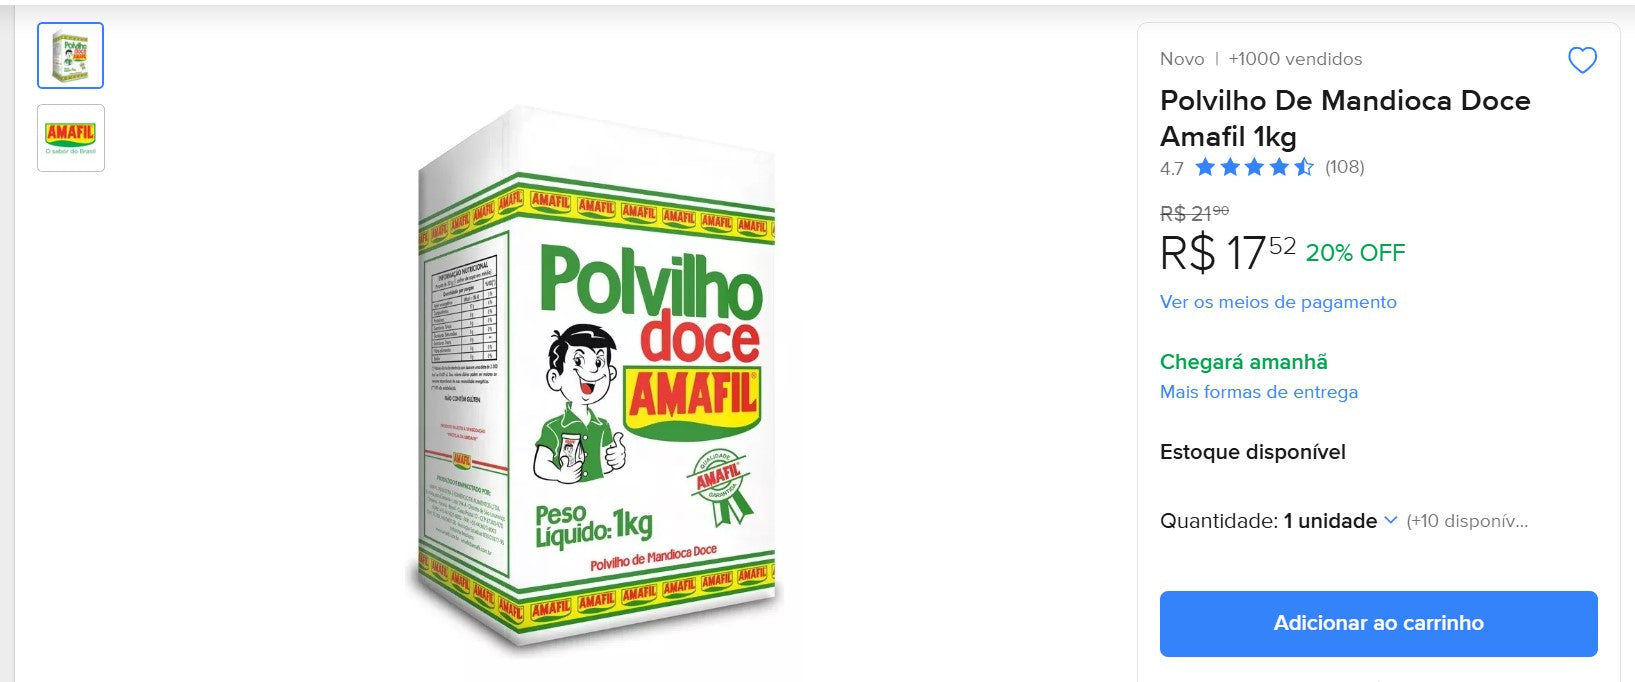 Personal Shopper | Buy from Brazil - Flocos de Milho | Polvilho Doce  - 22 kg DDP